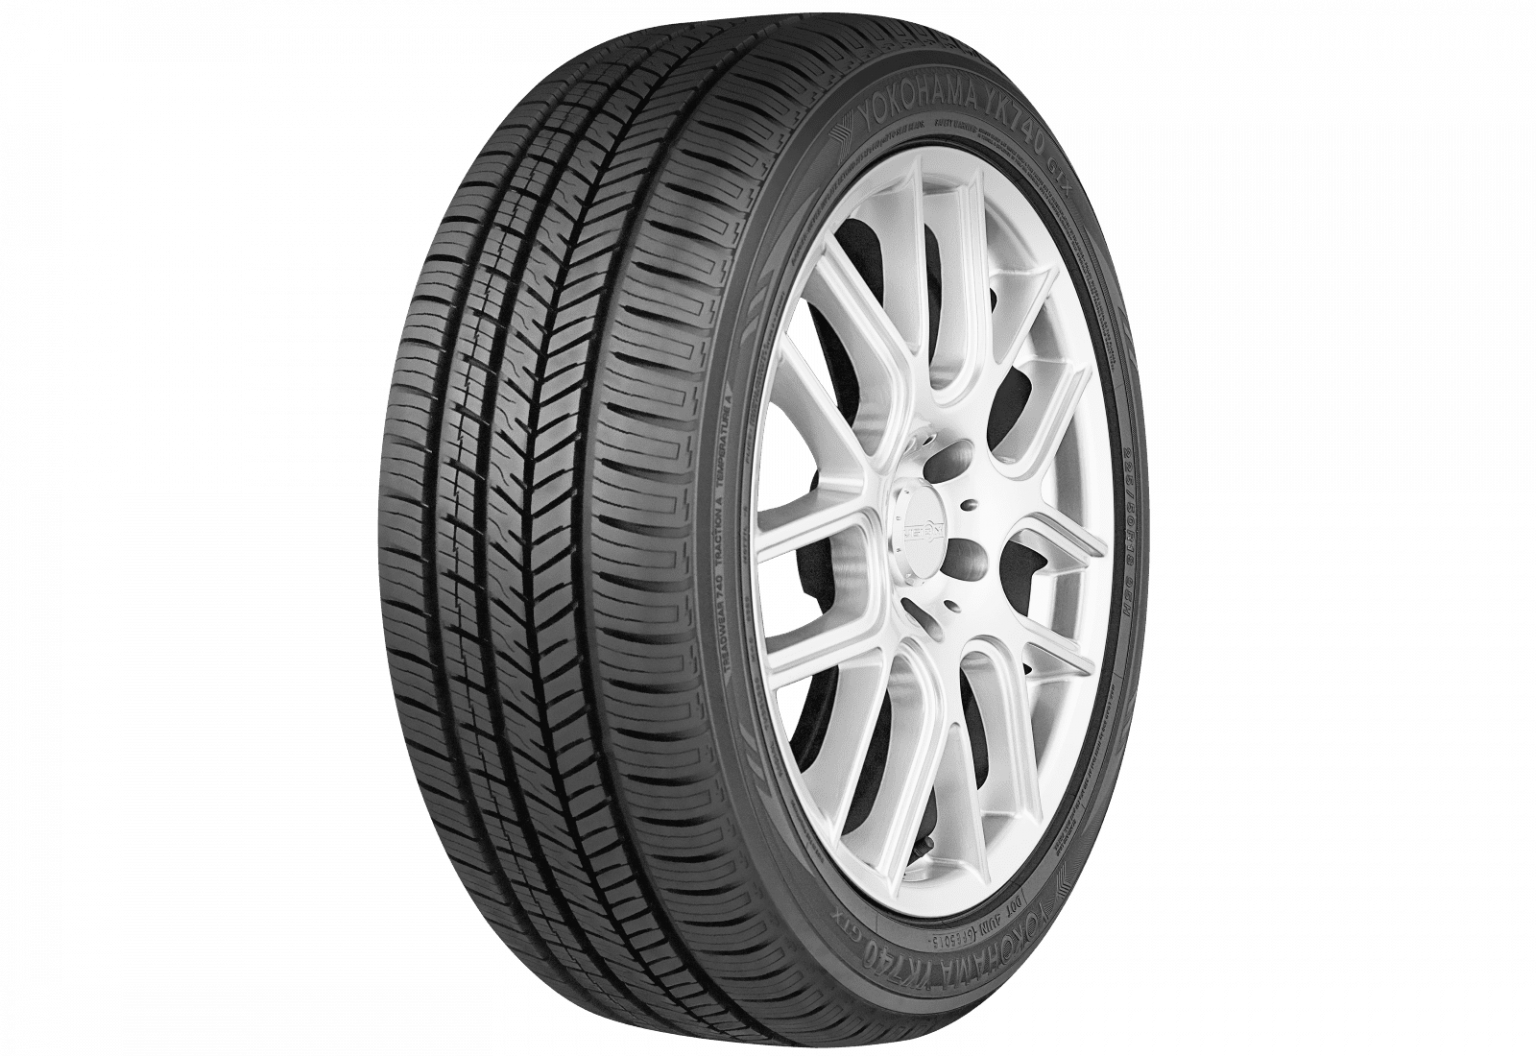 Yokohama YK740 GTX Review Tire Space Tires Reviews All Brands